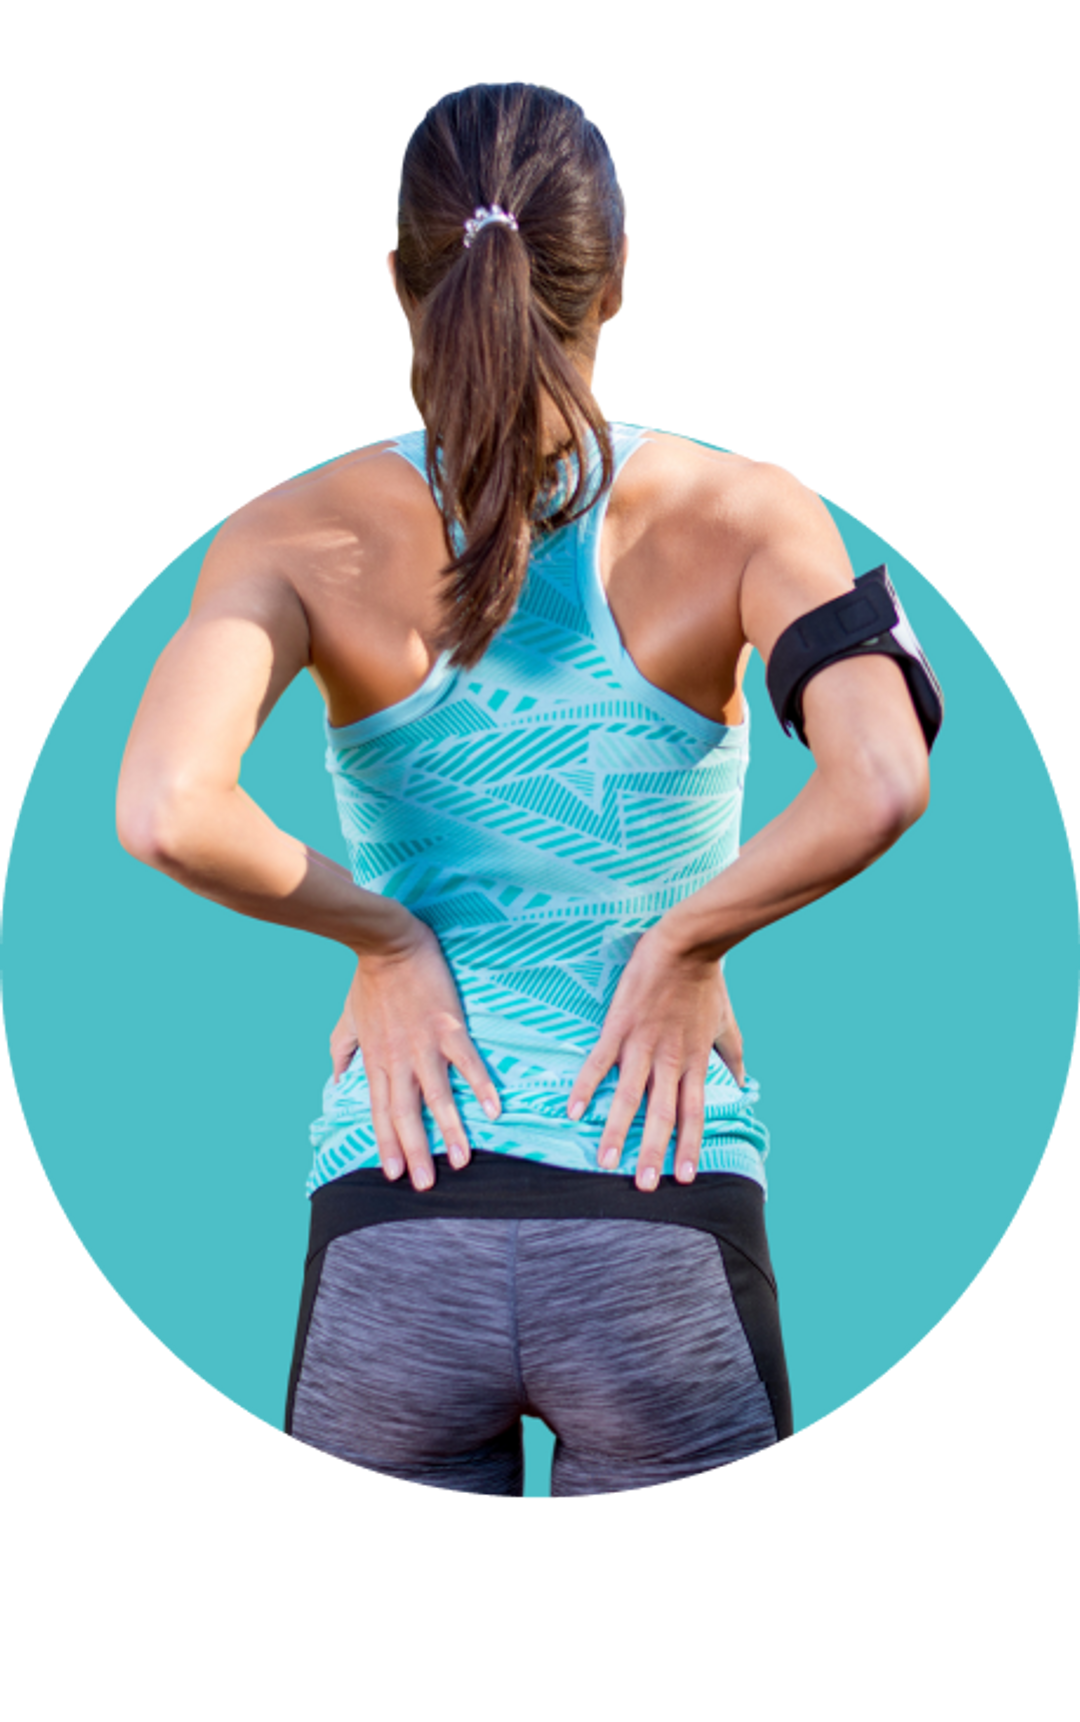 Lower back pain – Rehab plan by Exakt Health